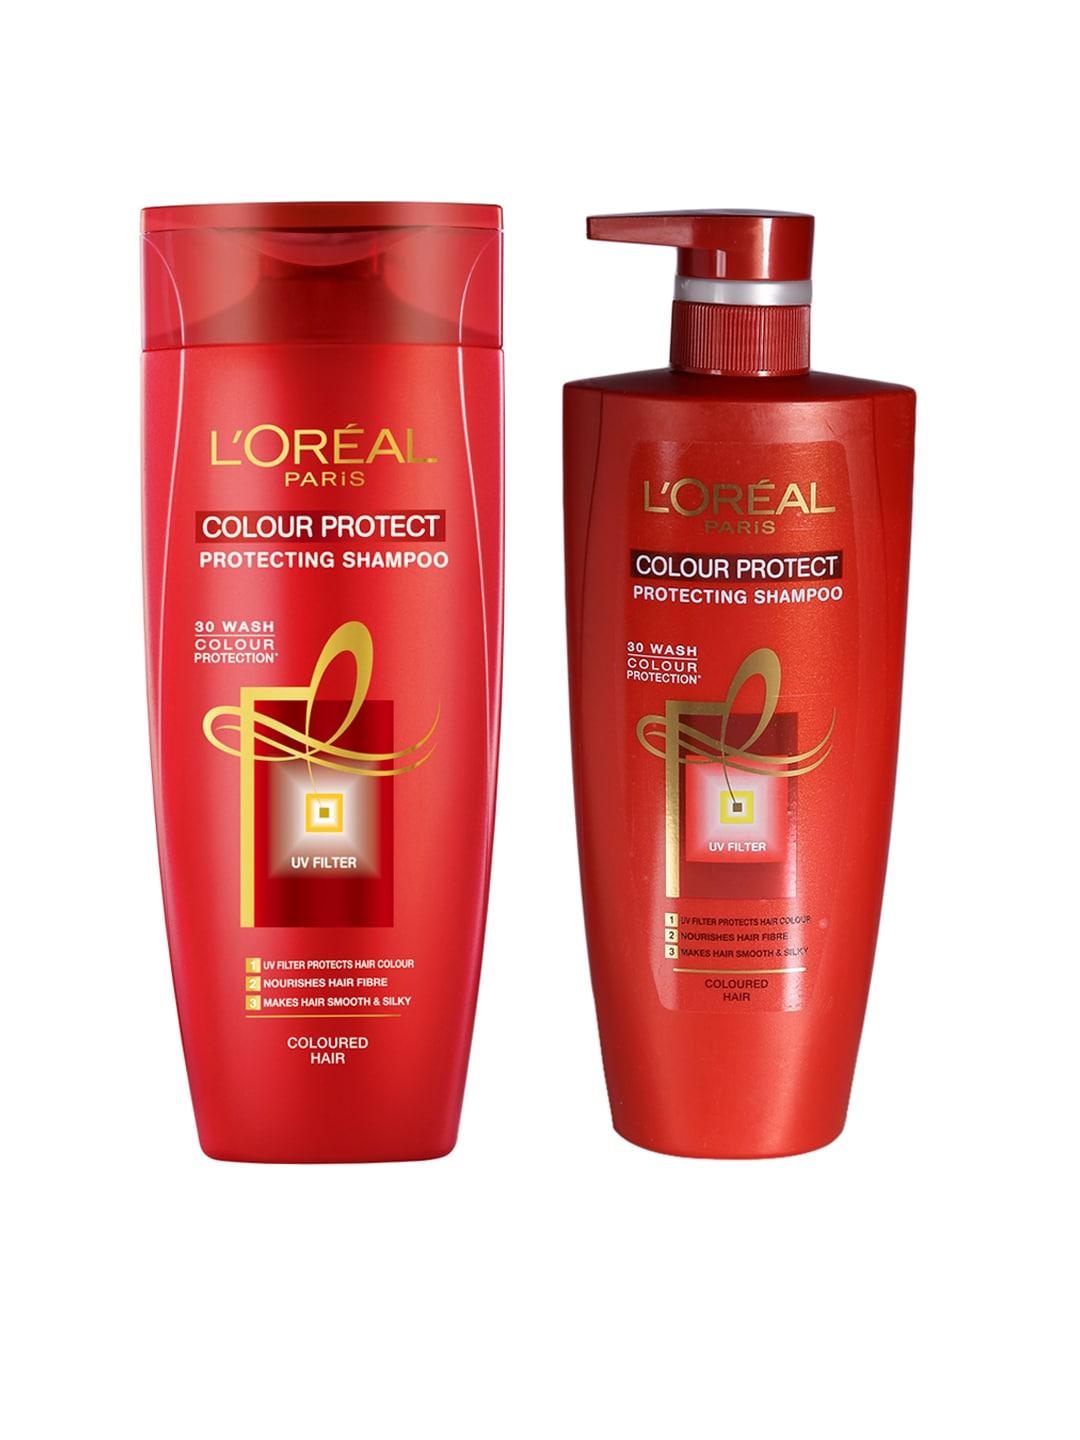 LOreal Paris Set of 2 Color Protect Shampoo